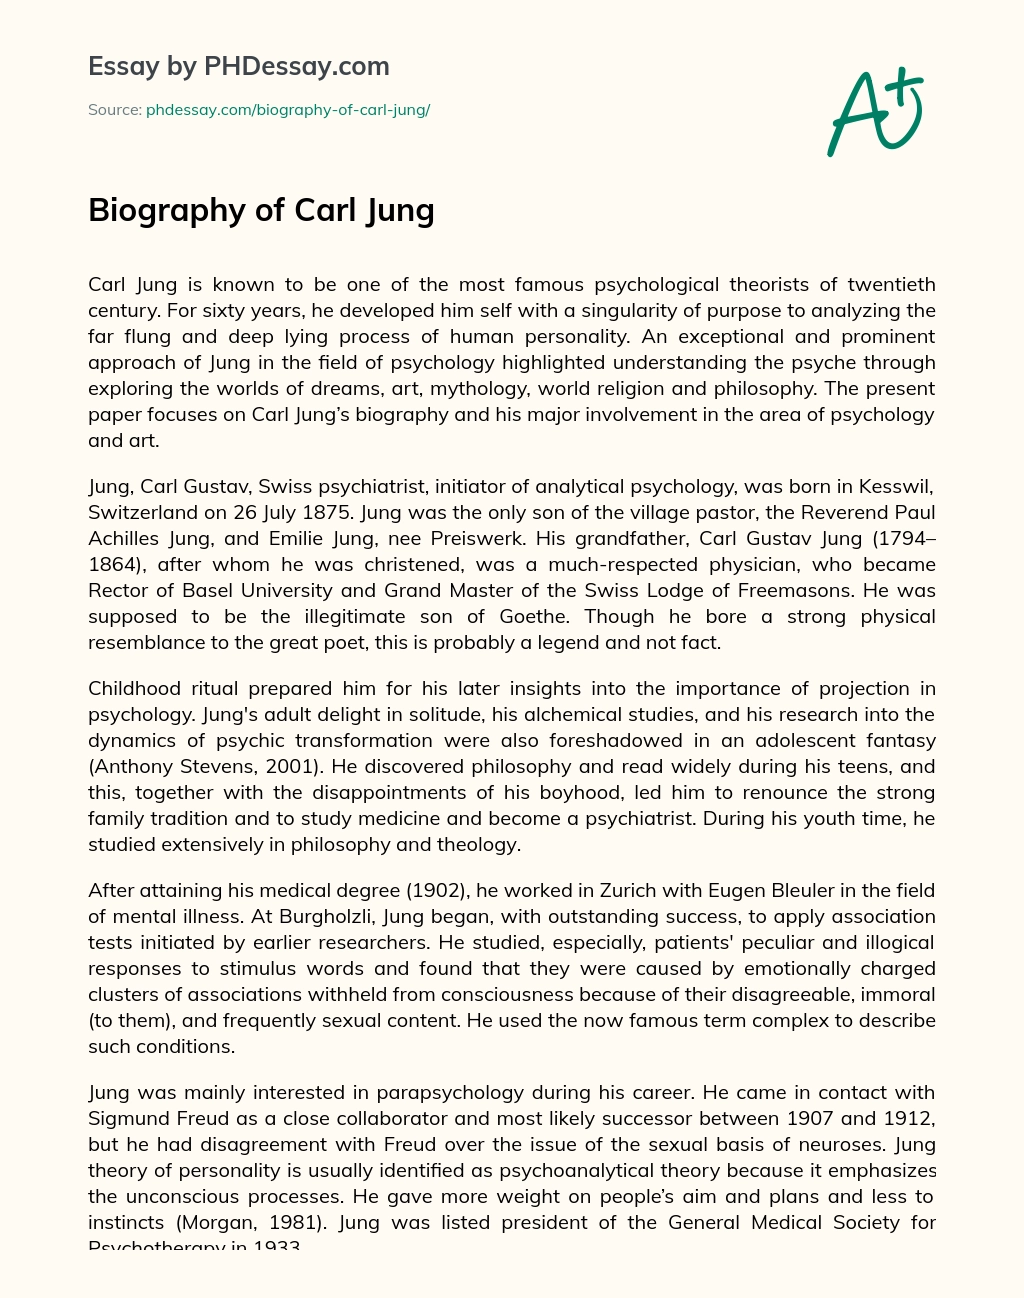 Biography of Carl Jung essay